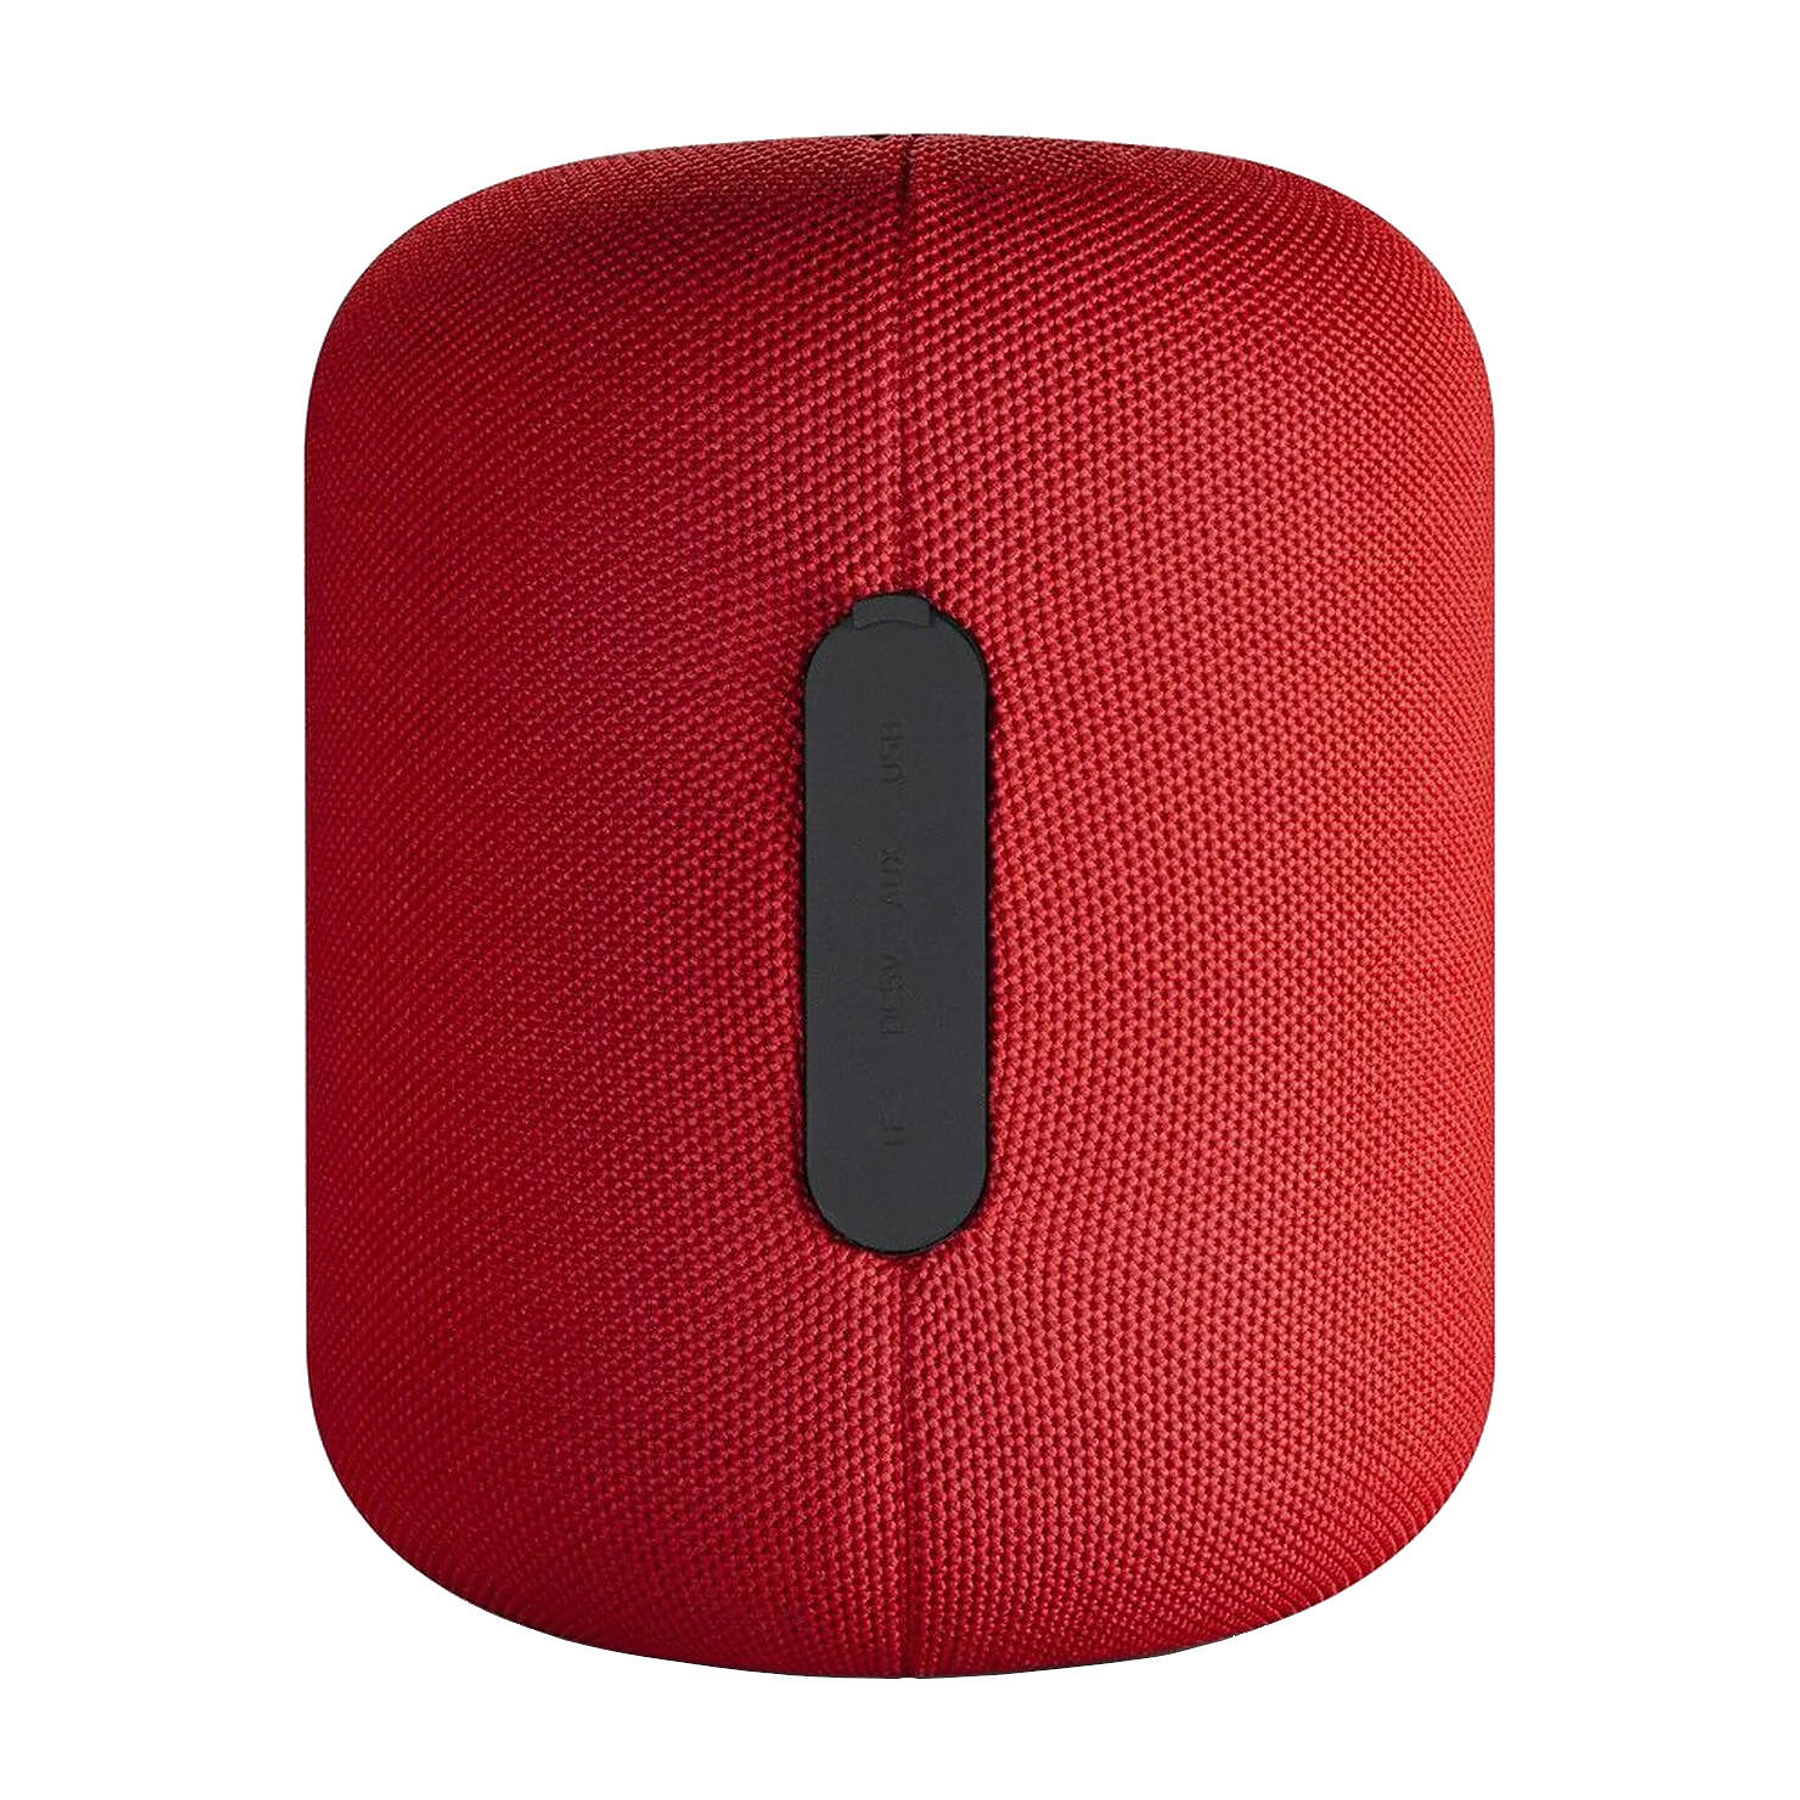 Parlante Portatil Bluetooth Novik START XL Smart Rojo